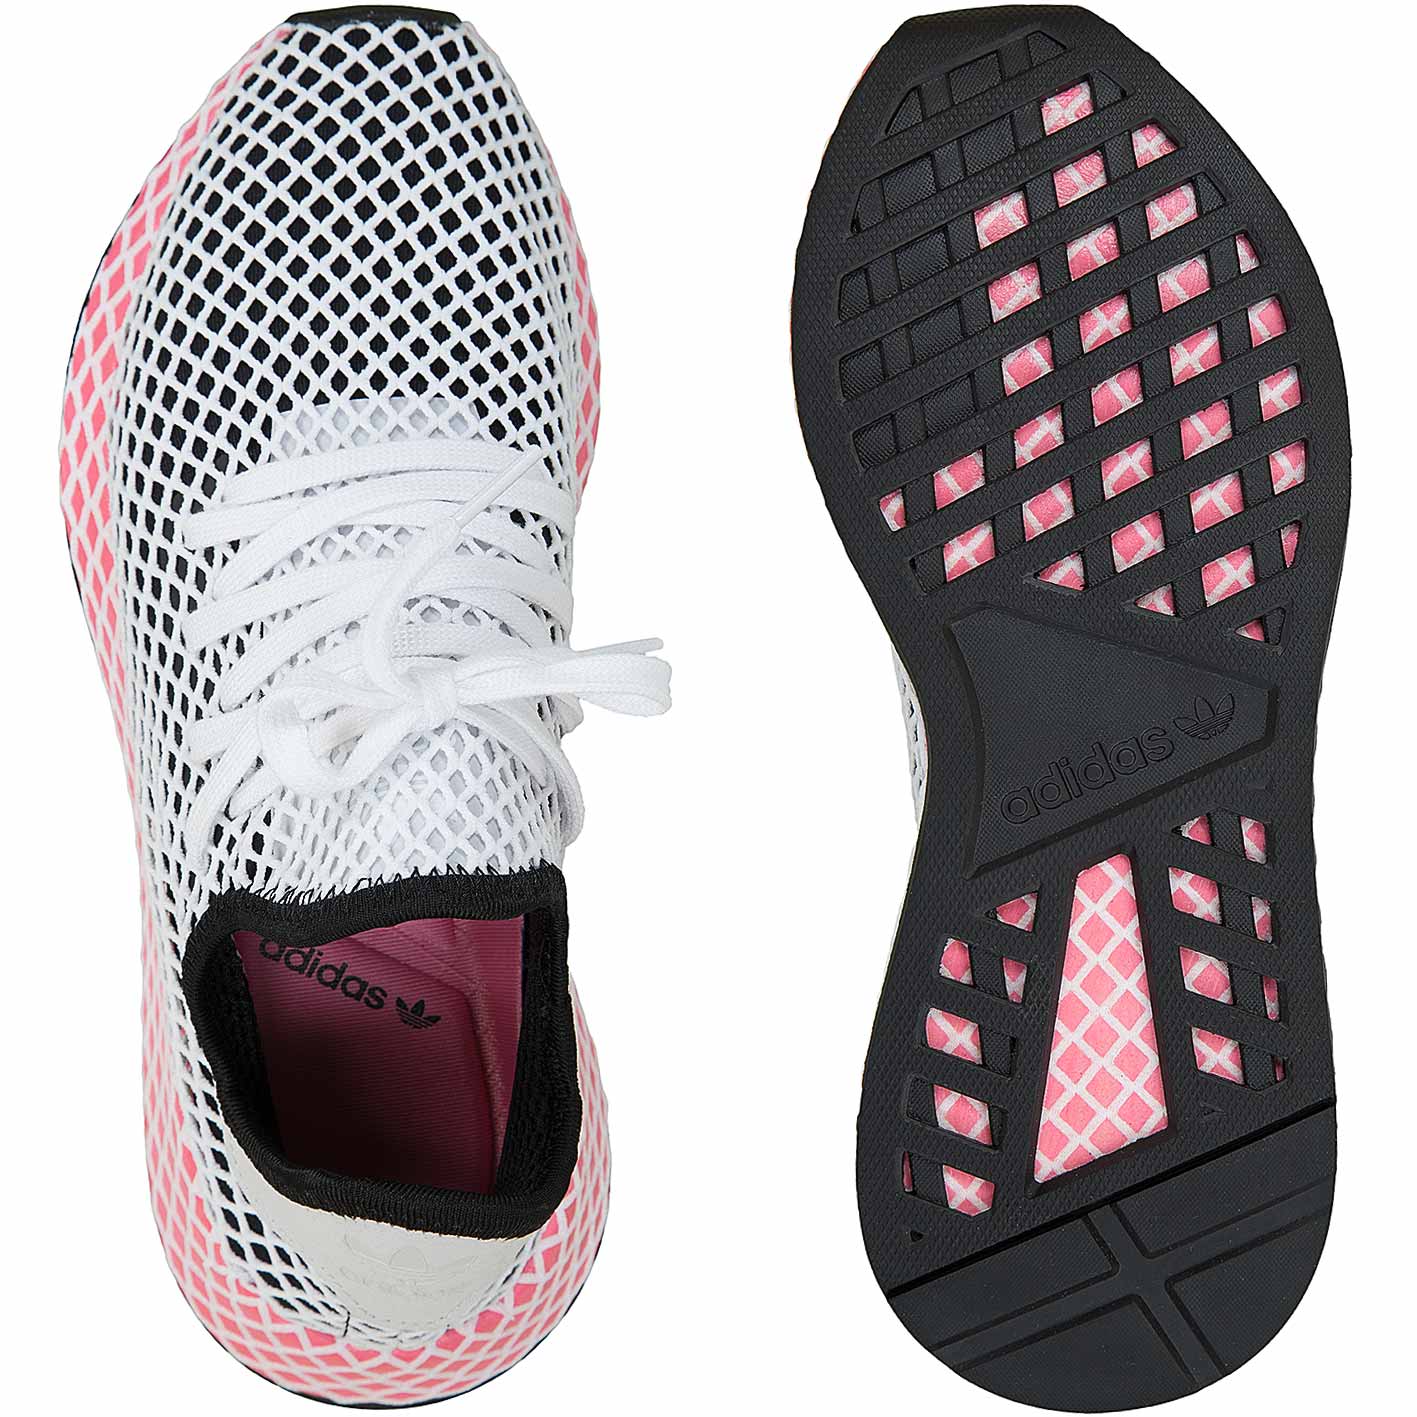 ☆ Adidas Originals Damen Sneaker Deerupt schwarz/weiß/pink hier bestellen!